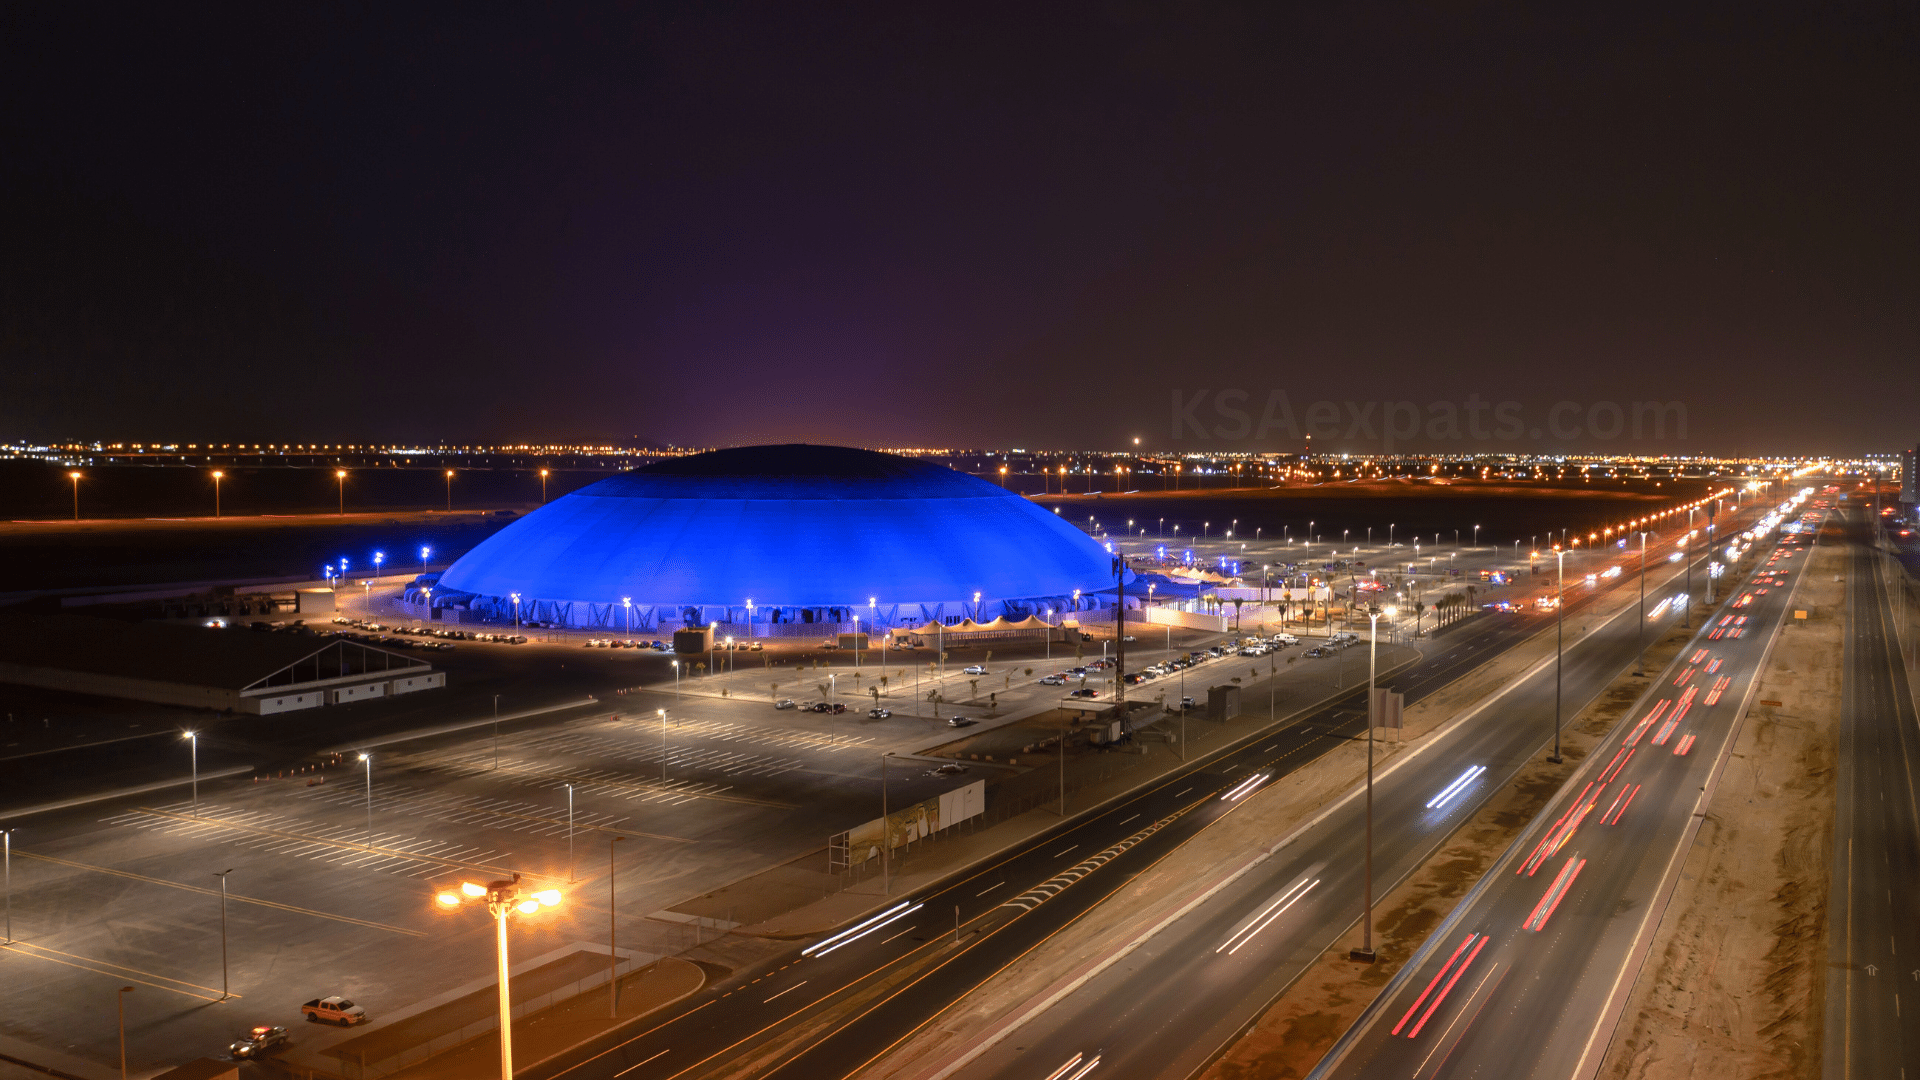 Jeddah Superdome